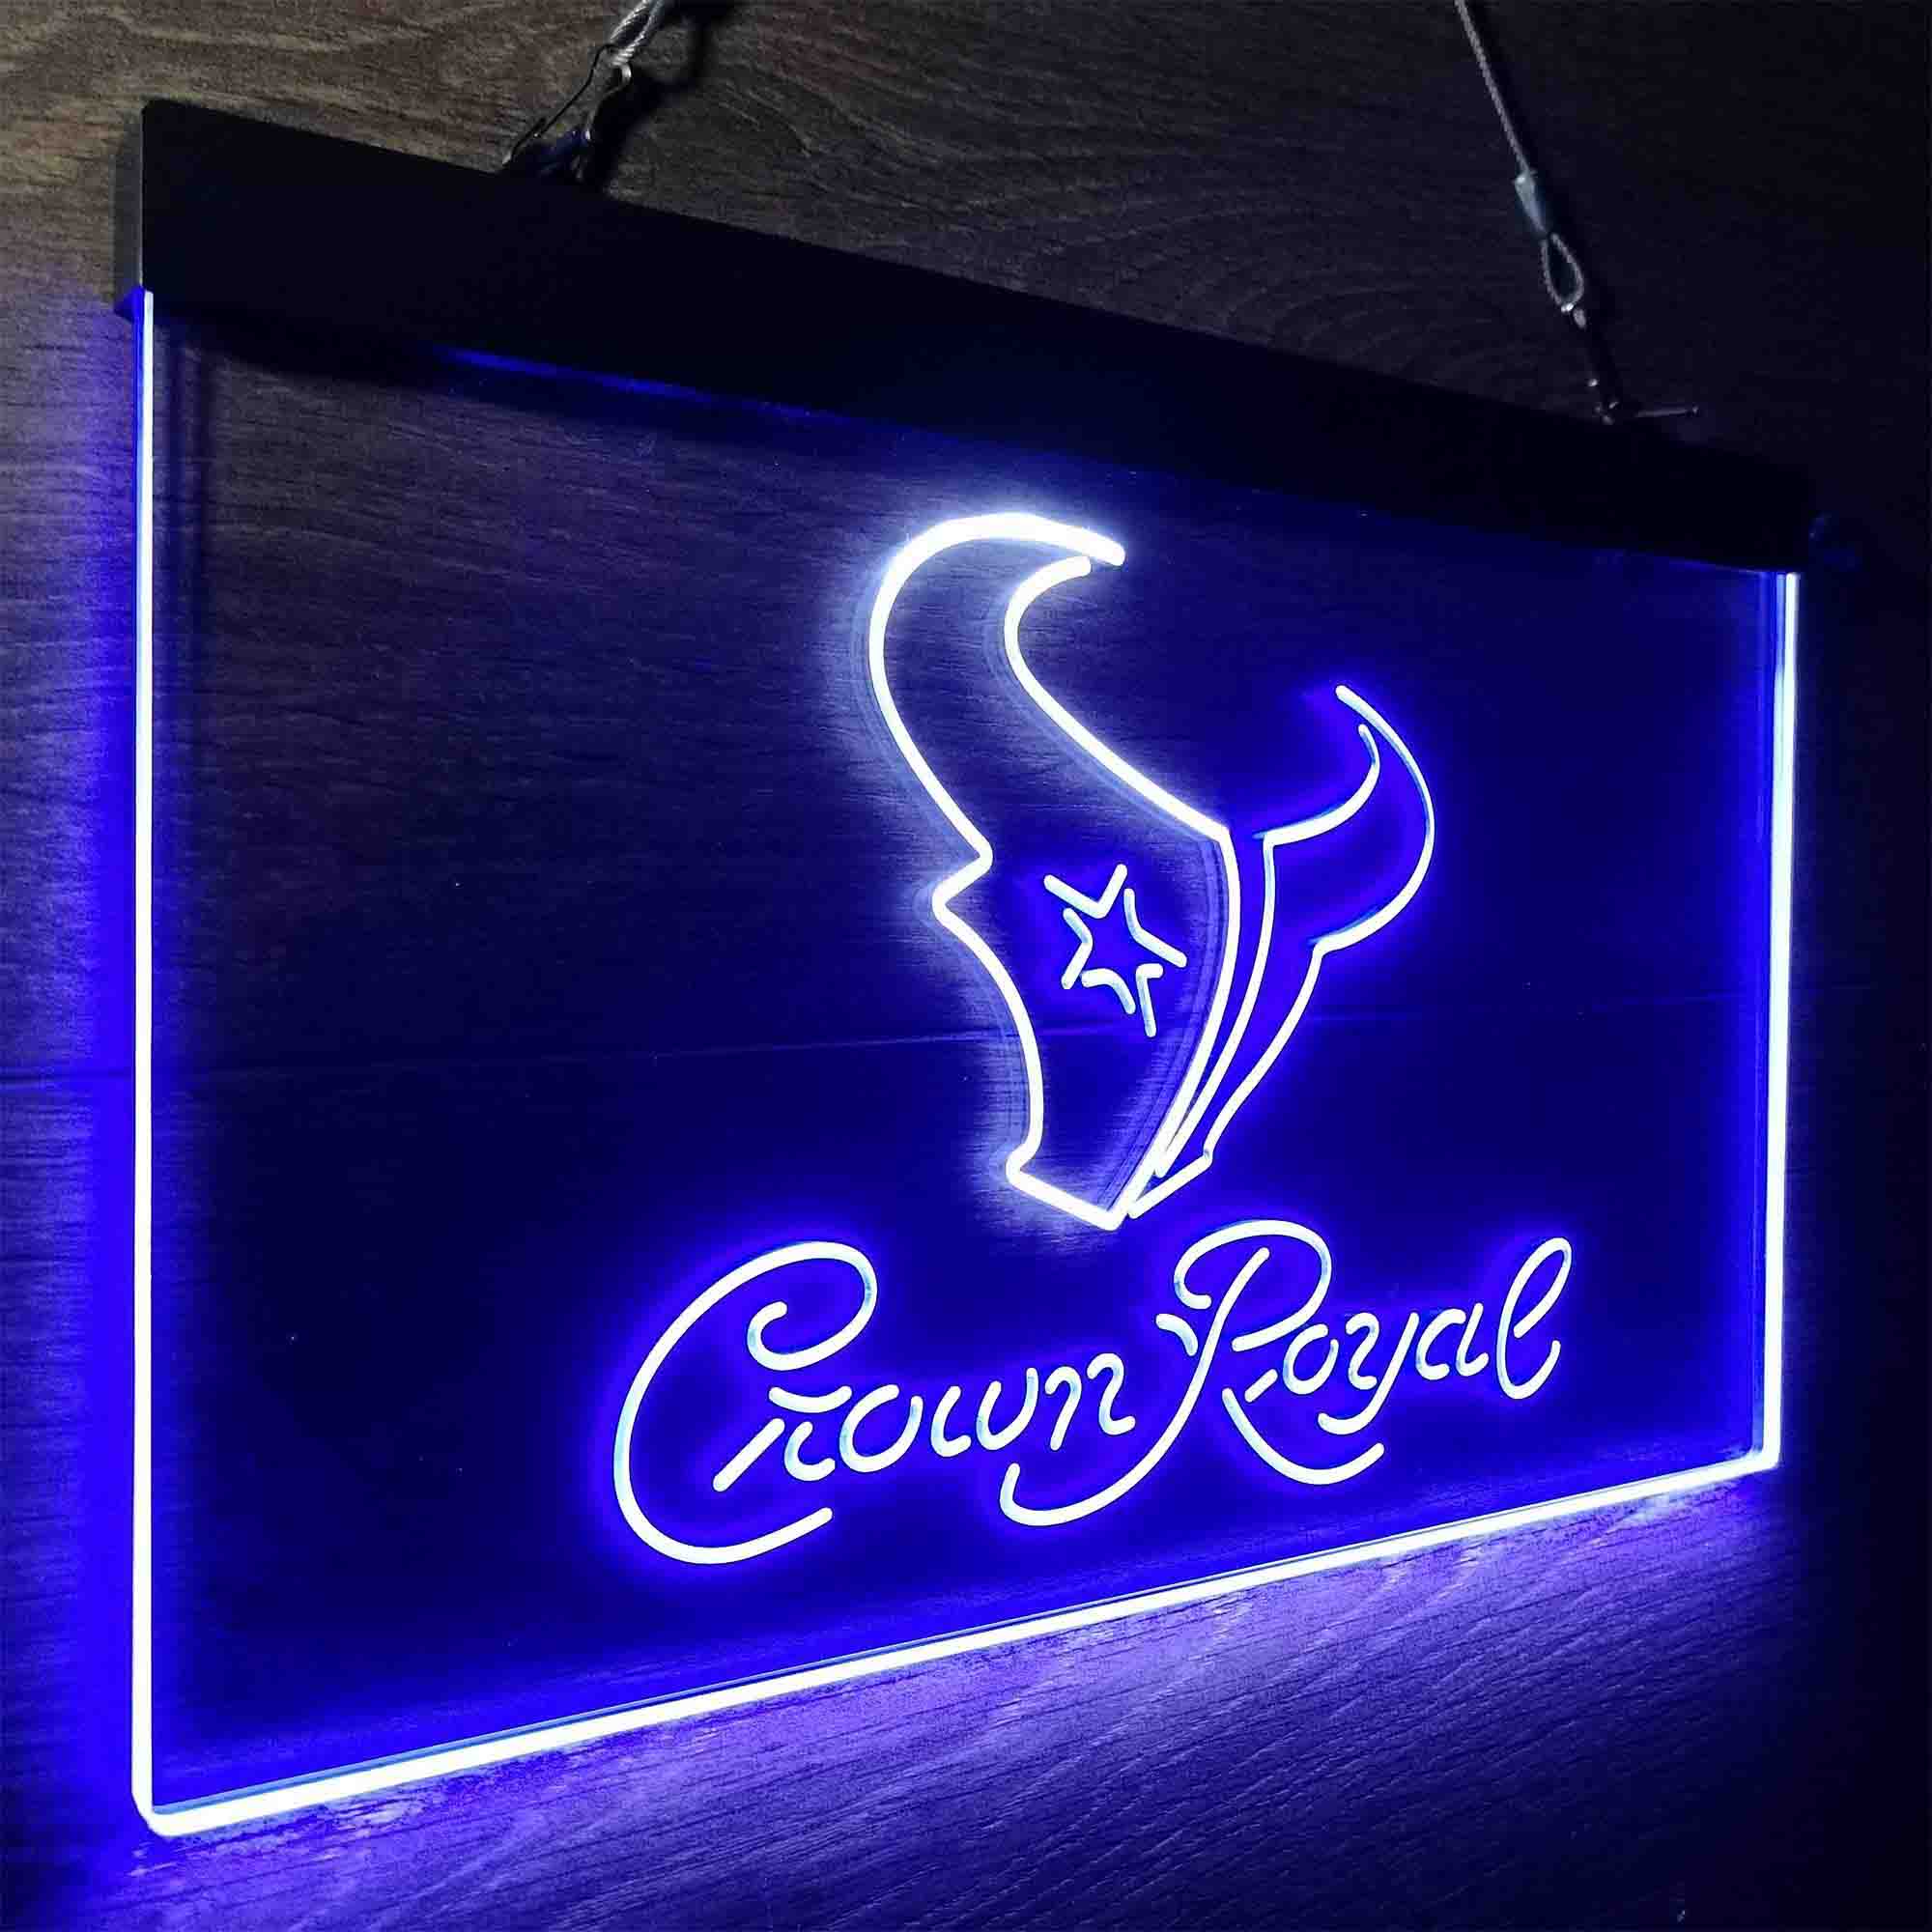 Crown Royal Bar Houston Texans Est. 2002 LED Neon Sign